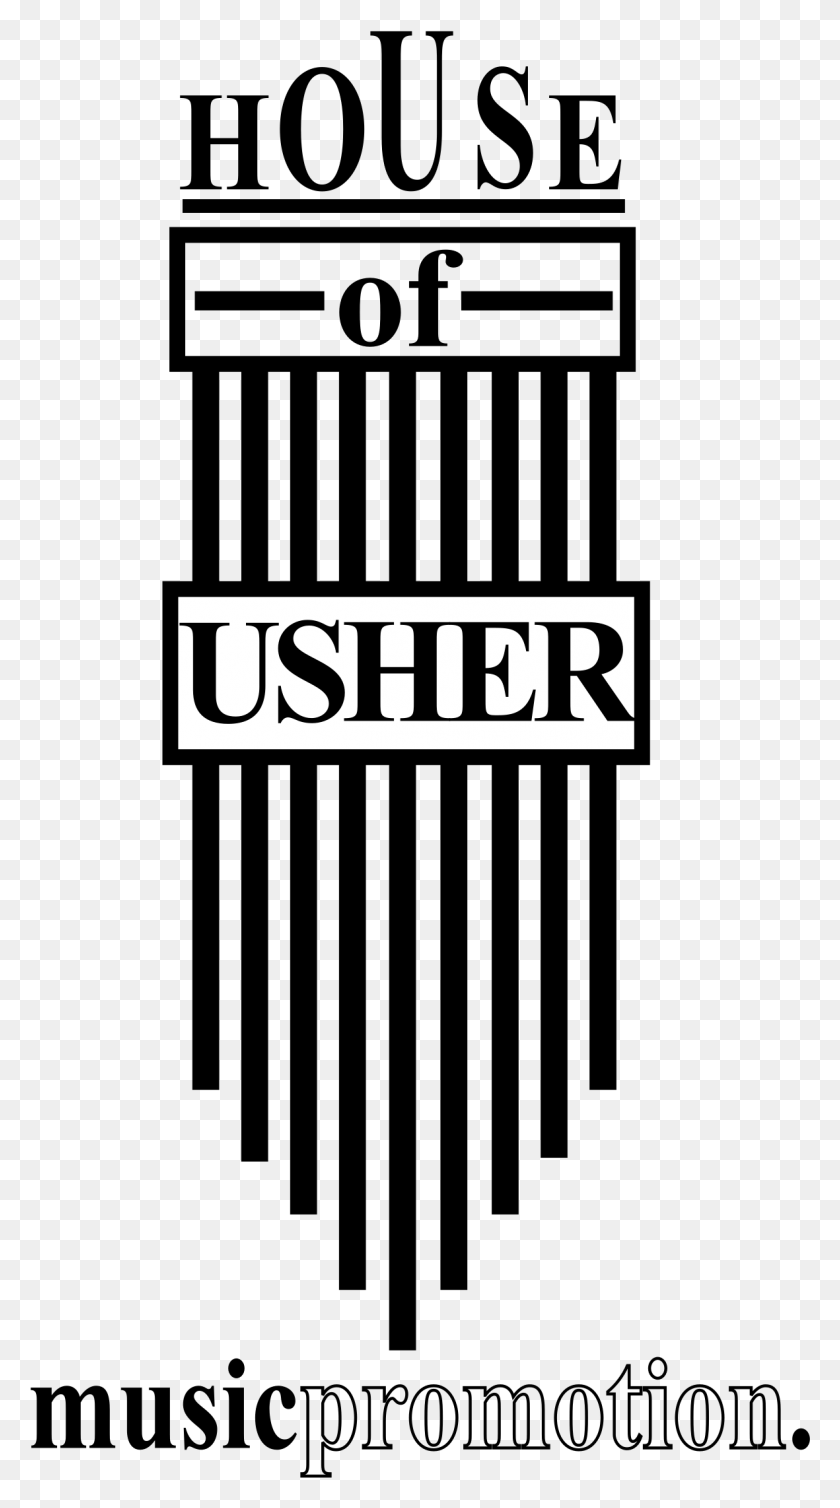 1181x2193 House Of Usher Music Promotion Logotipo, Cartel Transparente, Logotipo, Símbolo, Marca Registrada Hd Png